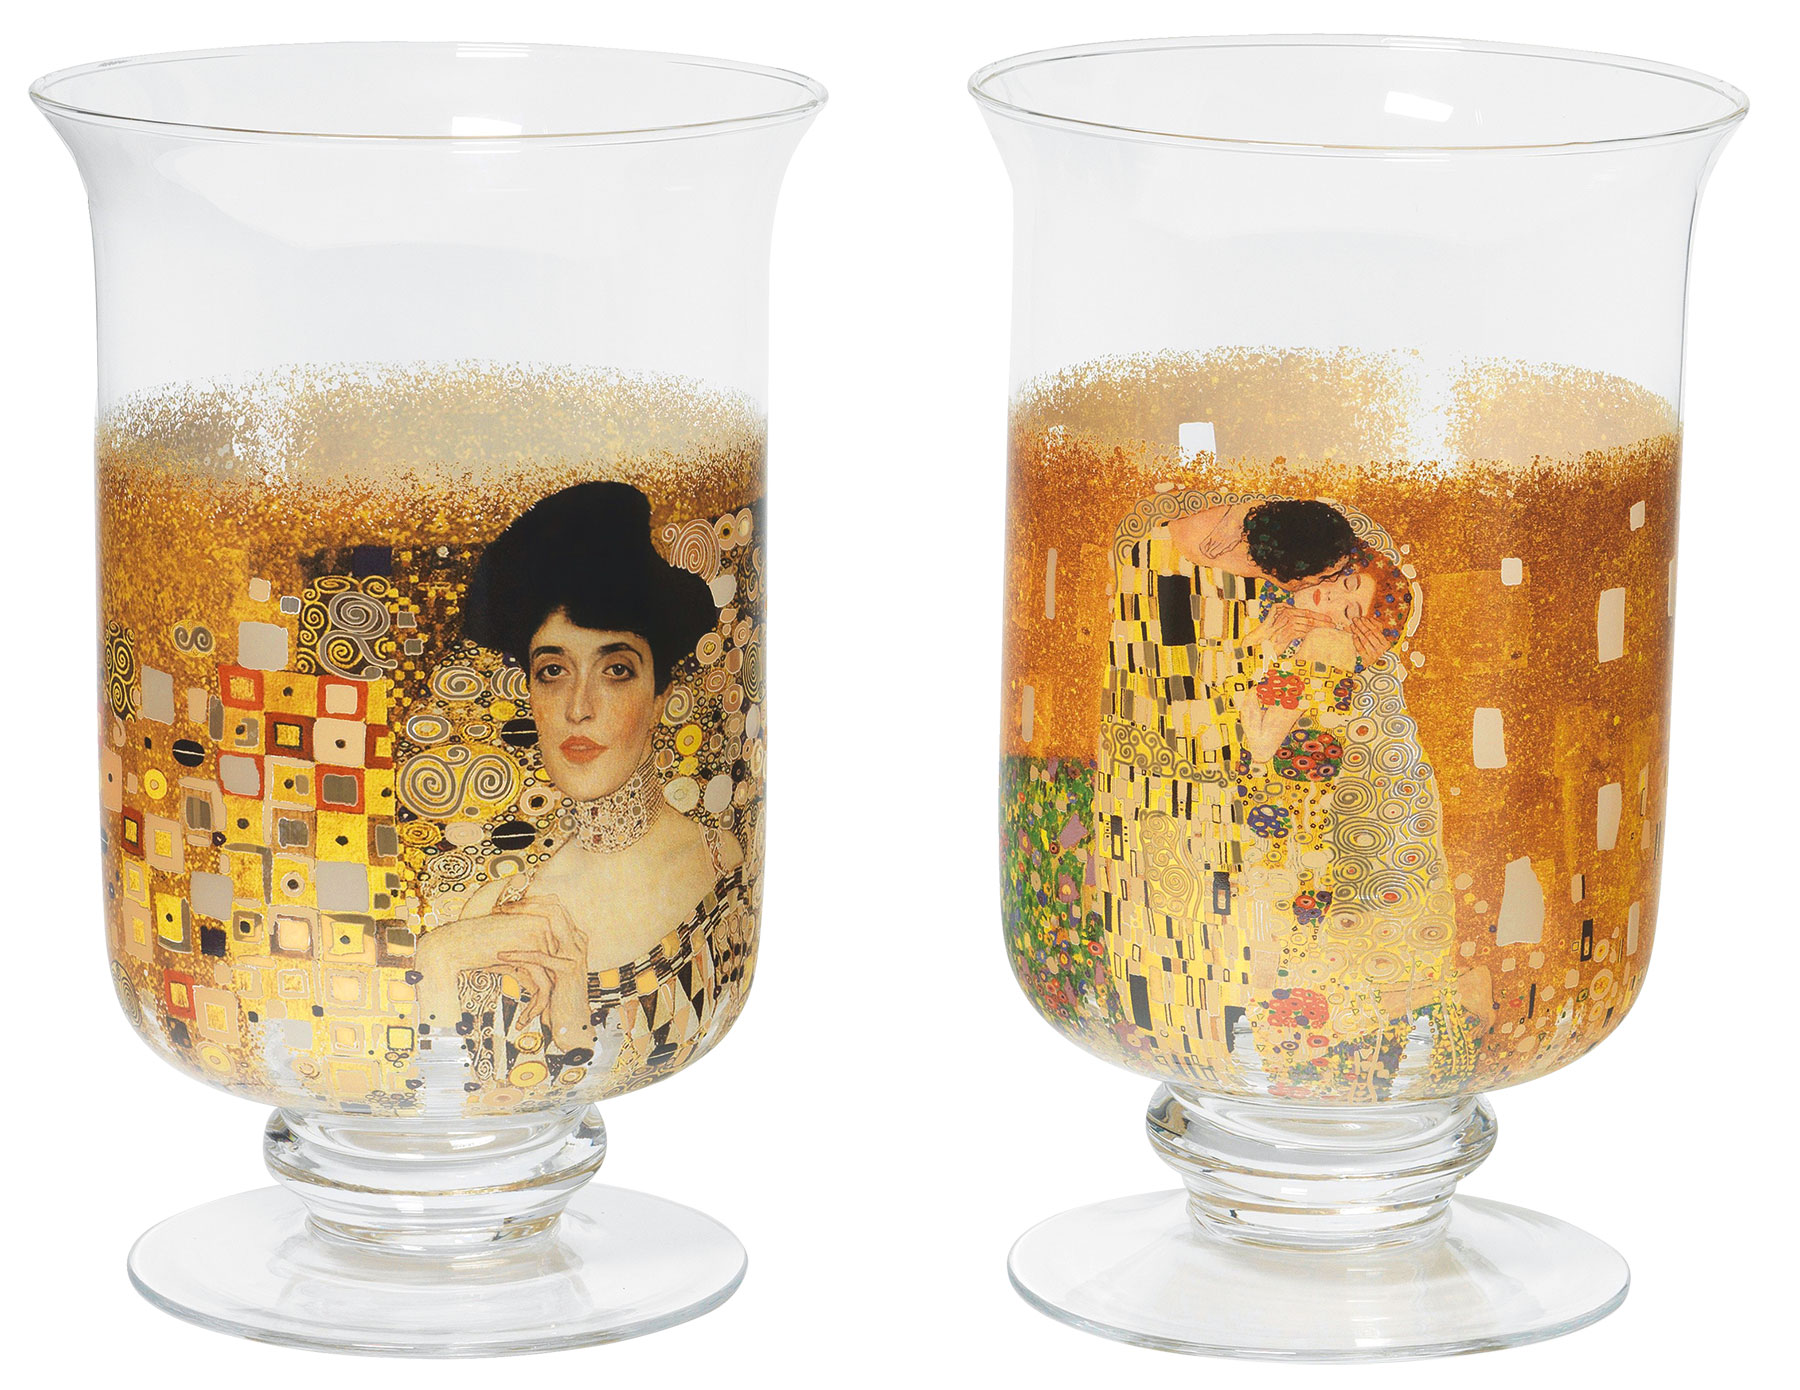 Set of 2 table lanterns / vases with artist's motifs by Gustav Klimt